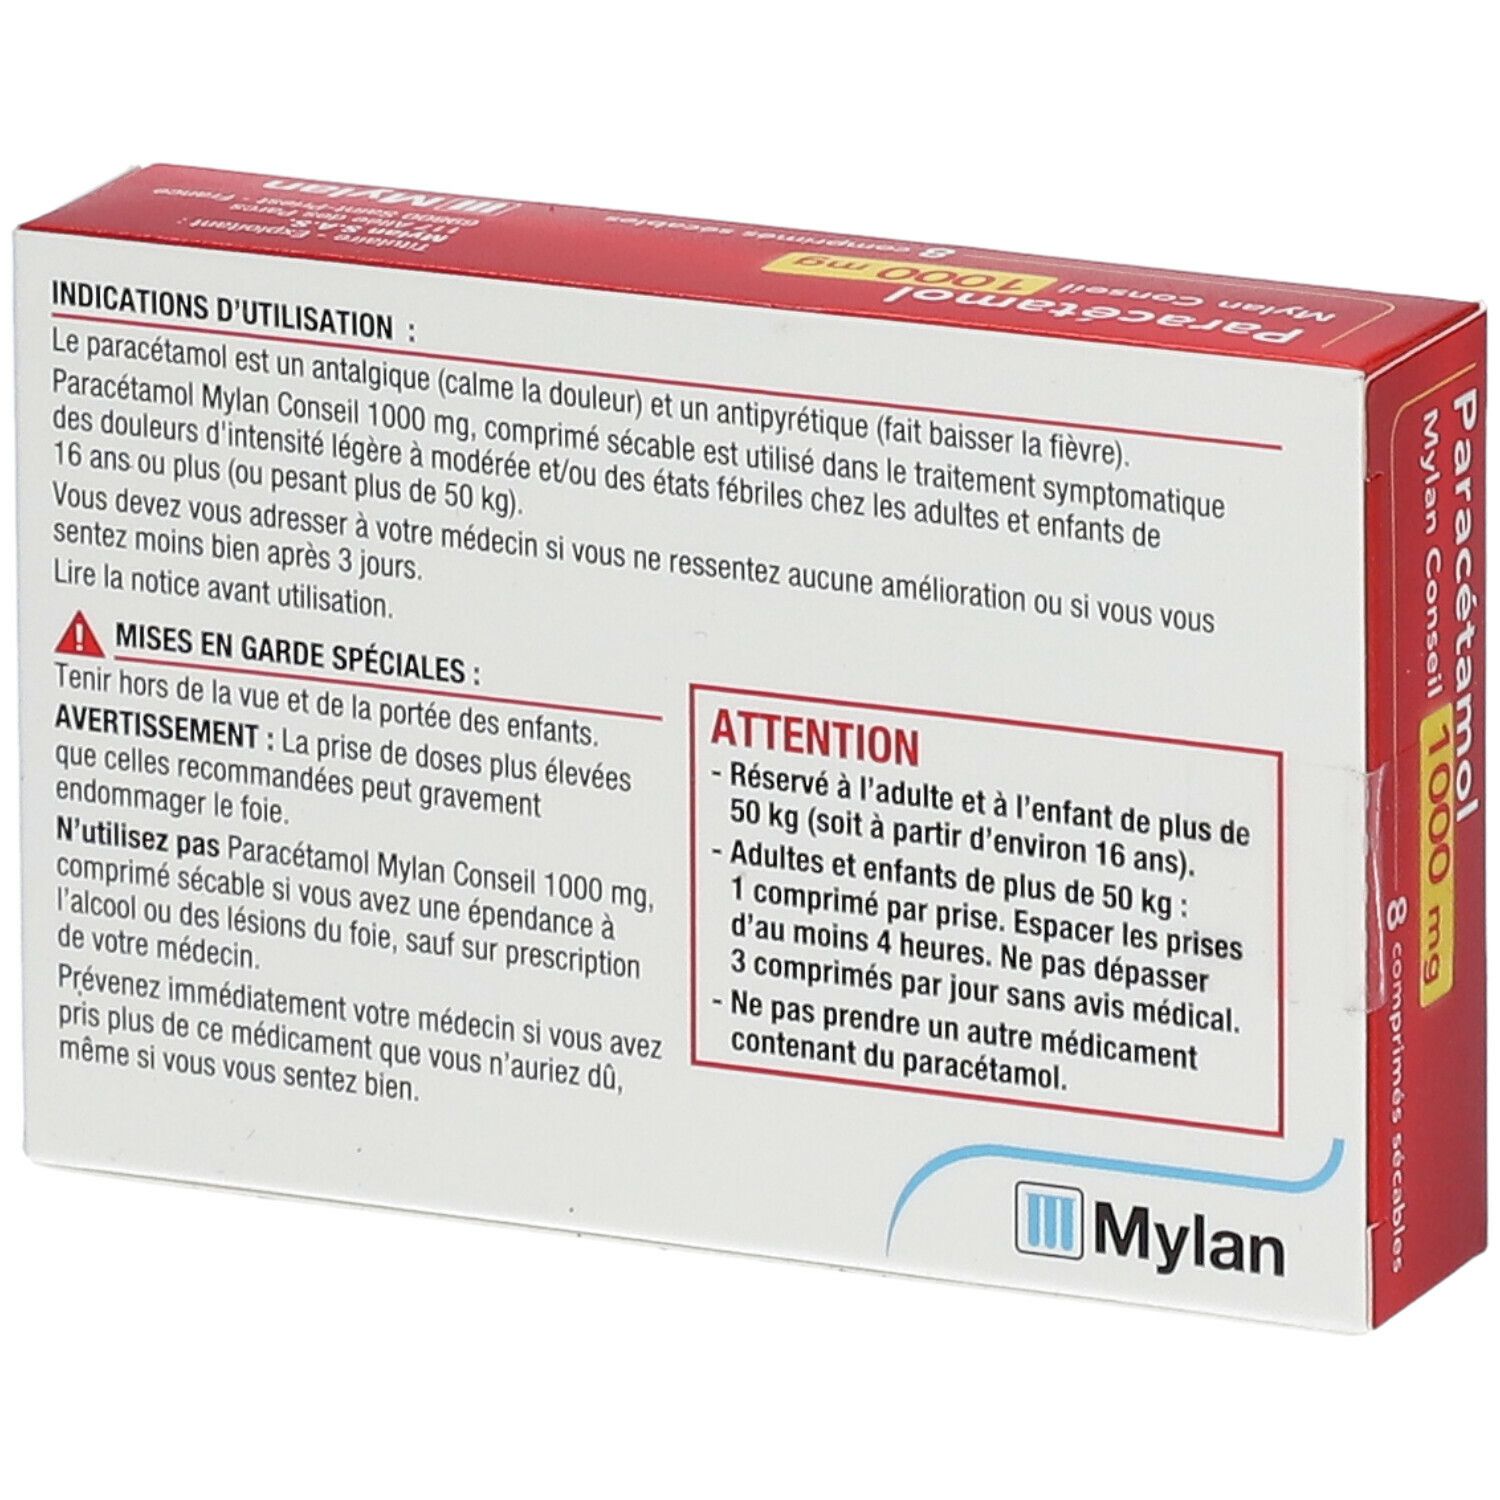 Paracétamol Mylan Conseil 1000 mg